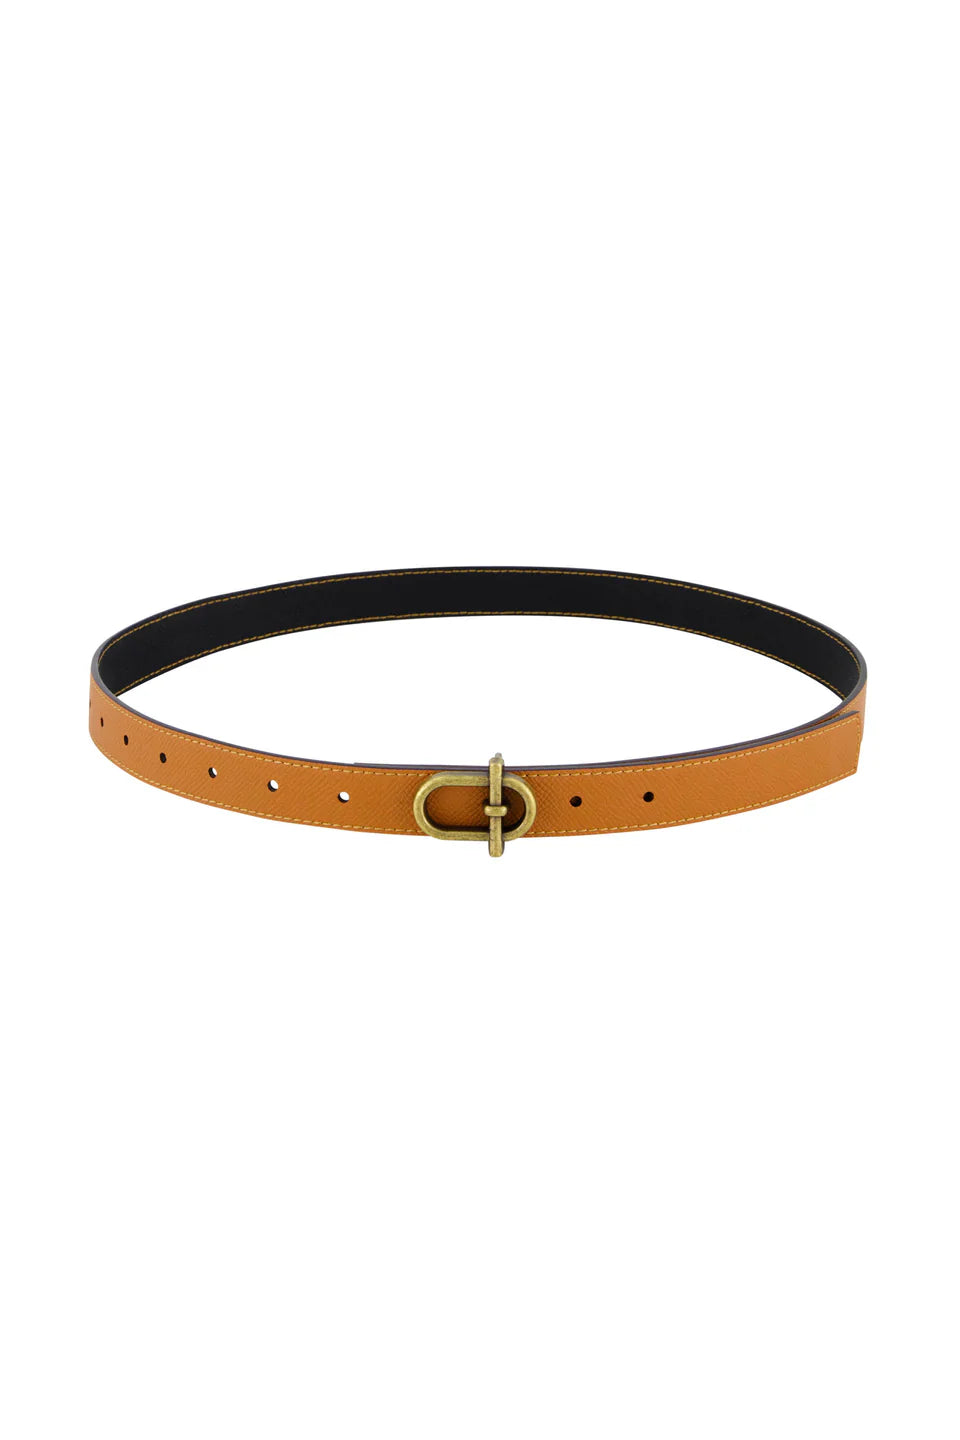 Verge Sling Leather Belt - Black/Brown